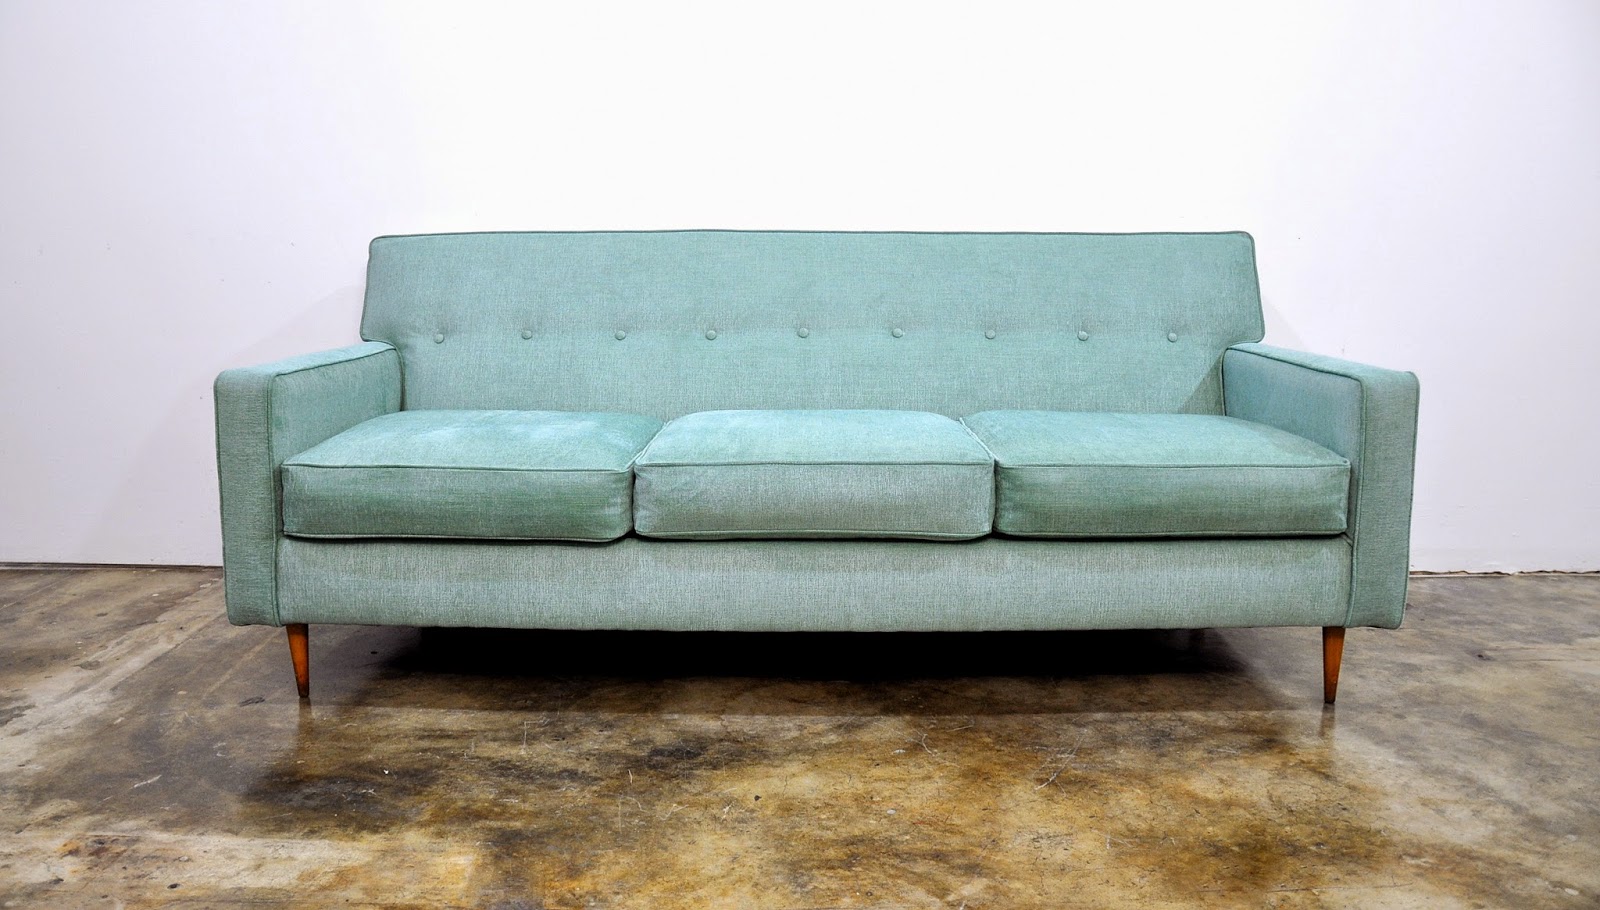 SELECT MODERN: Mid Century Modern Sofa